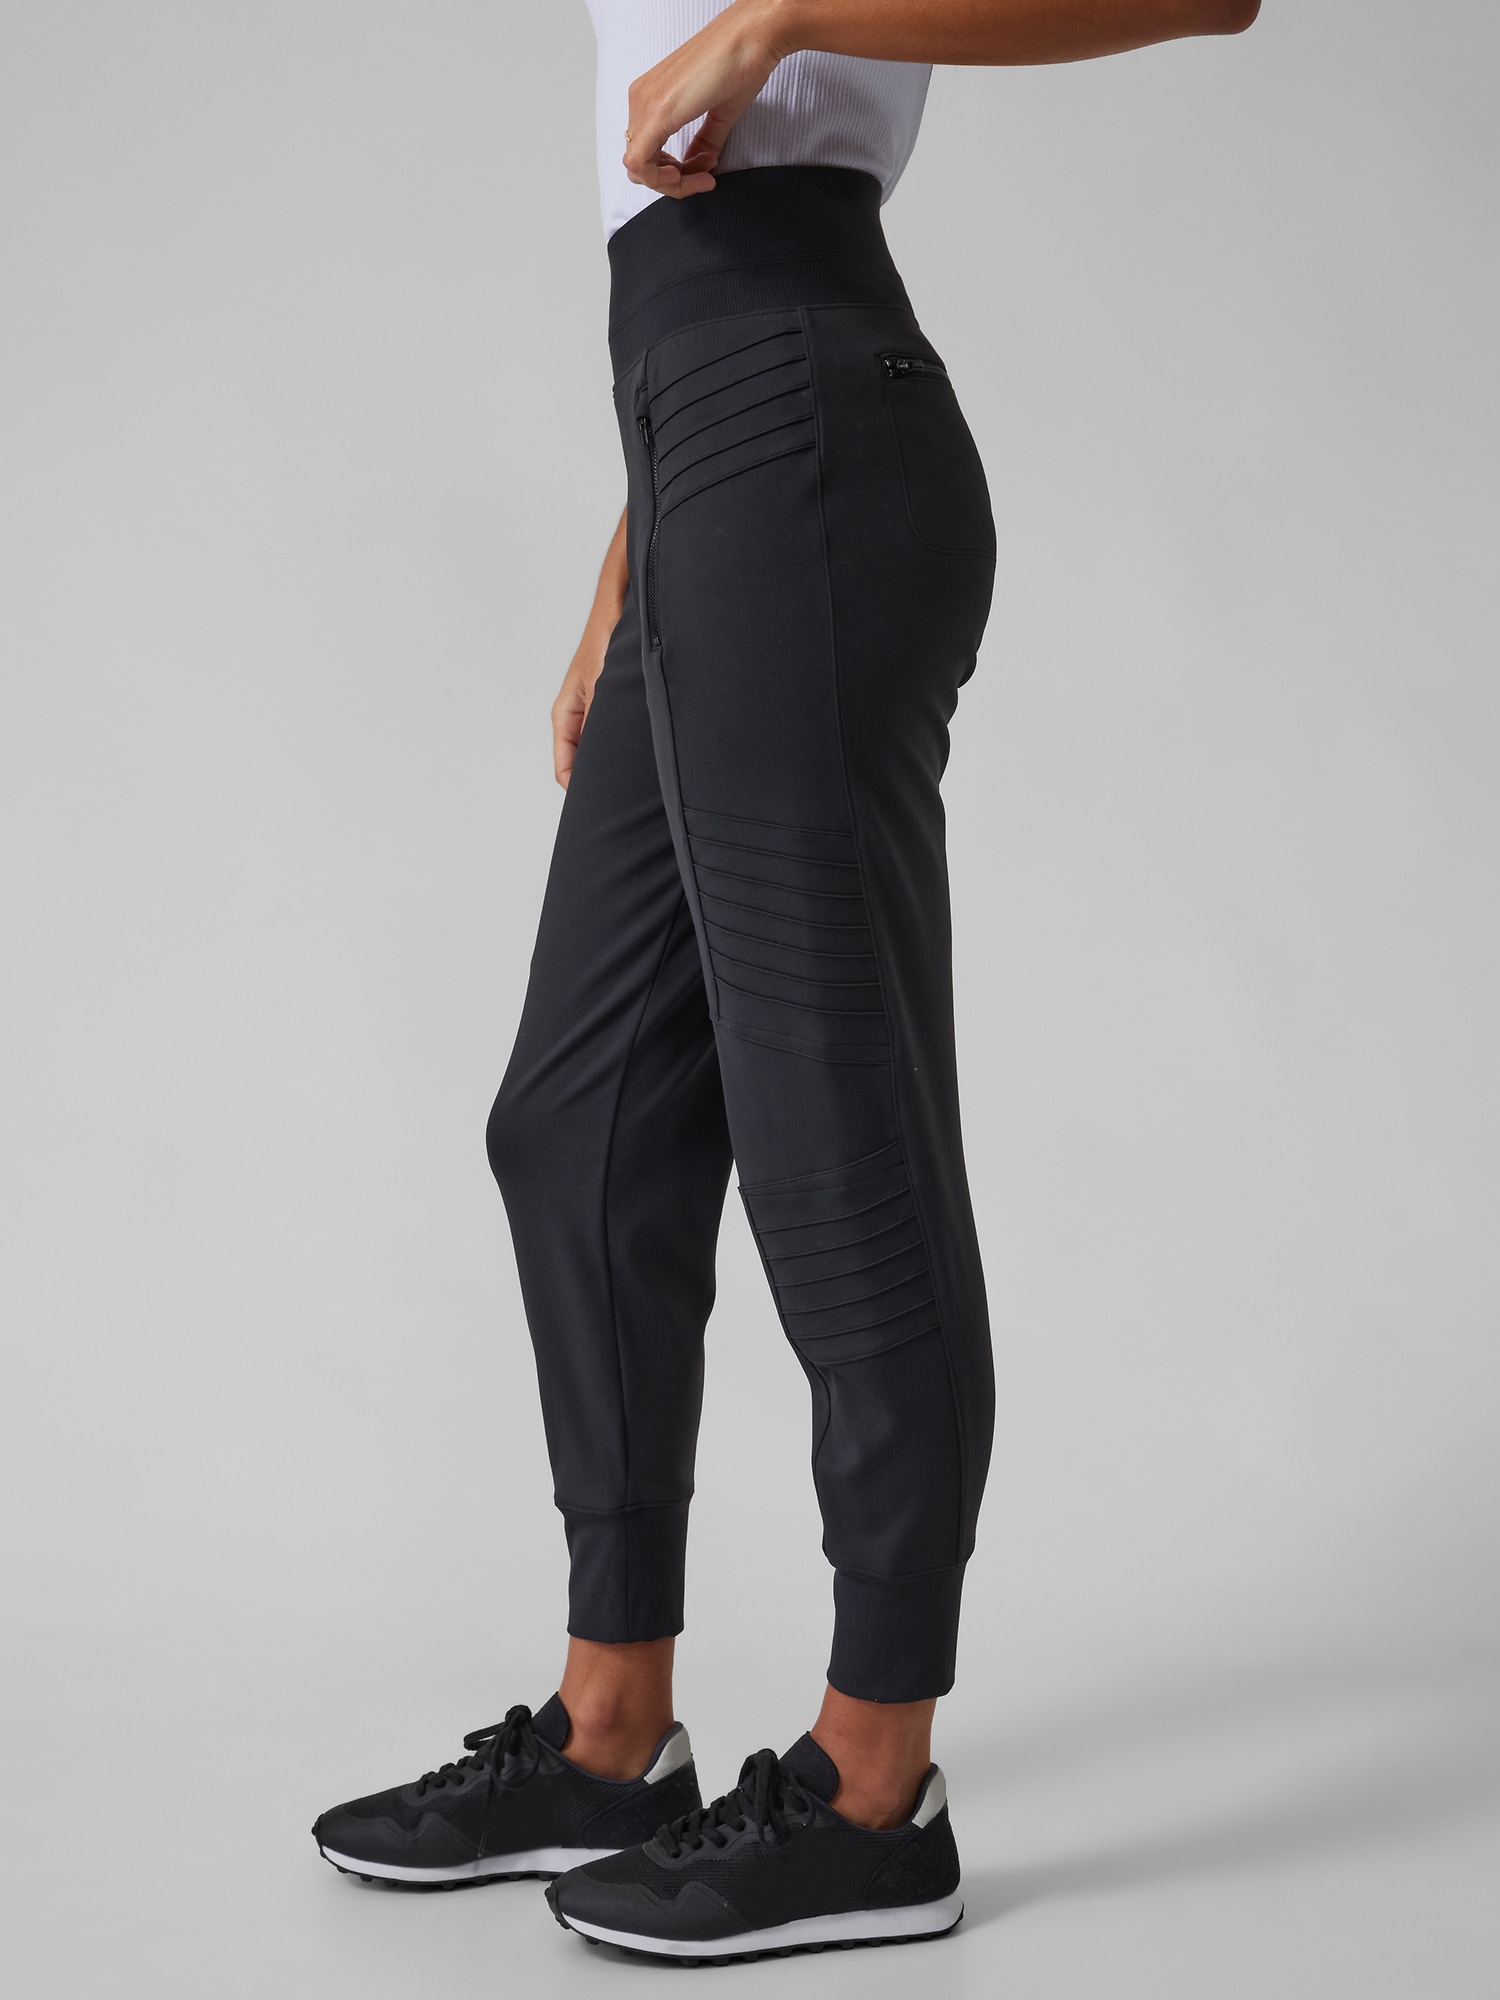 Athleta woman's metro skinny pants grey, back pockets, size small